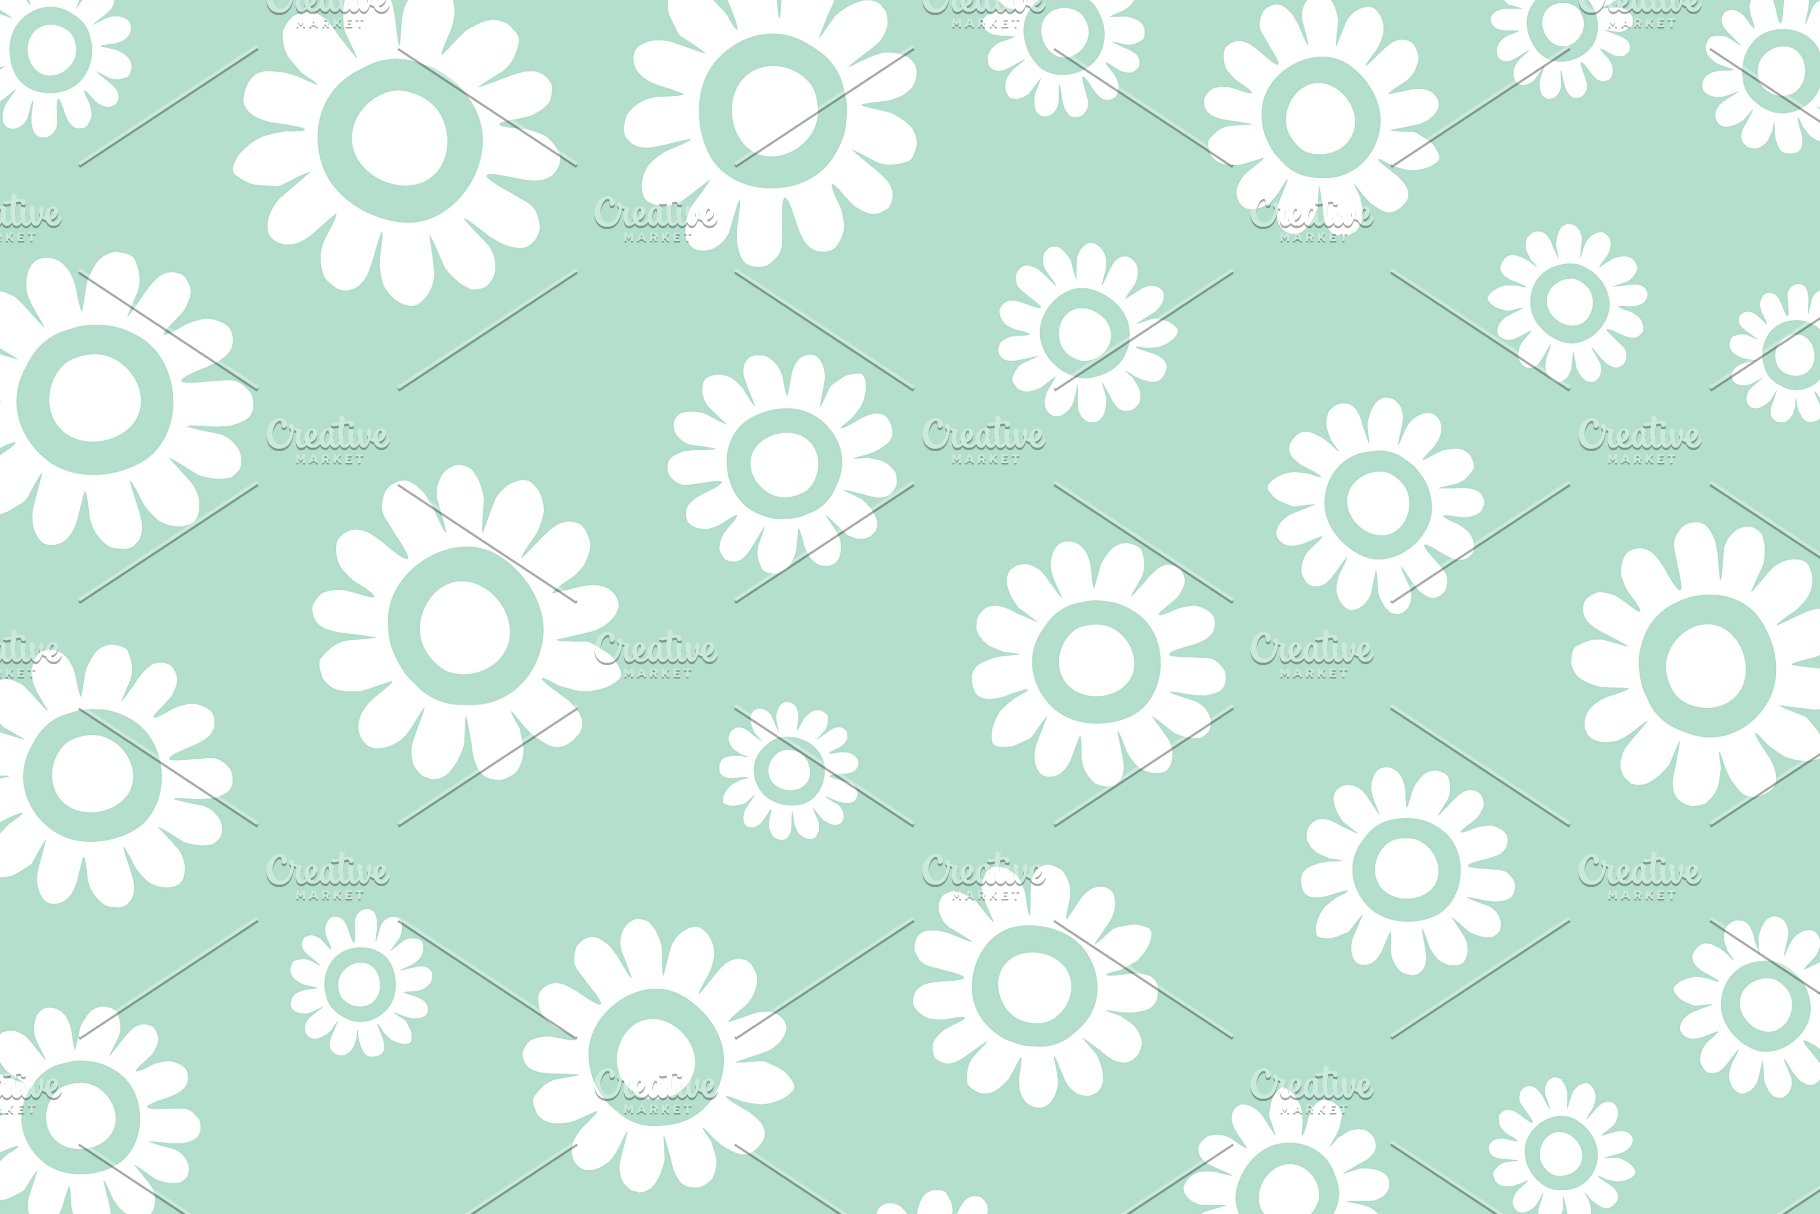 60种配色1440款花卉图案纹理 1,440 Floral Patterns in 60 Colors插图(11)